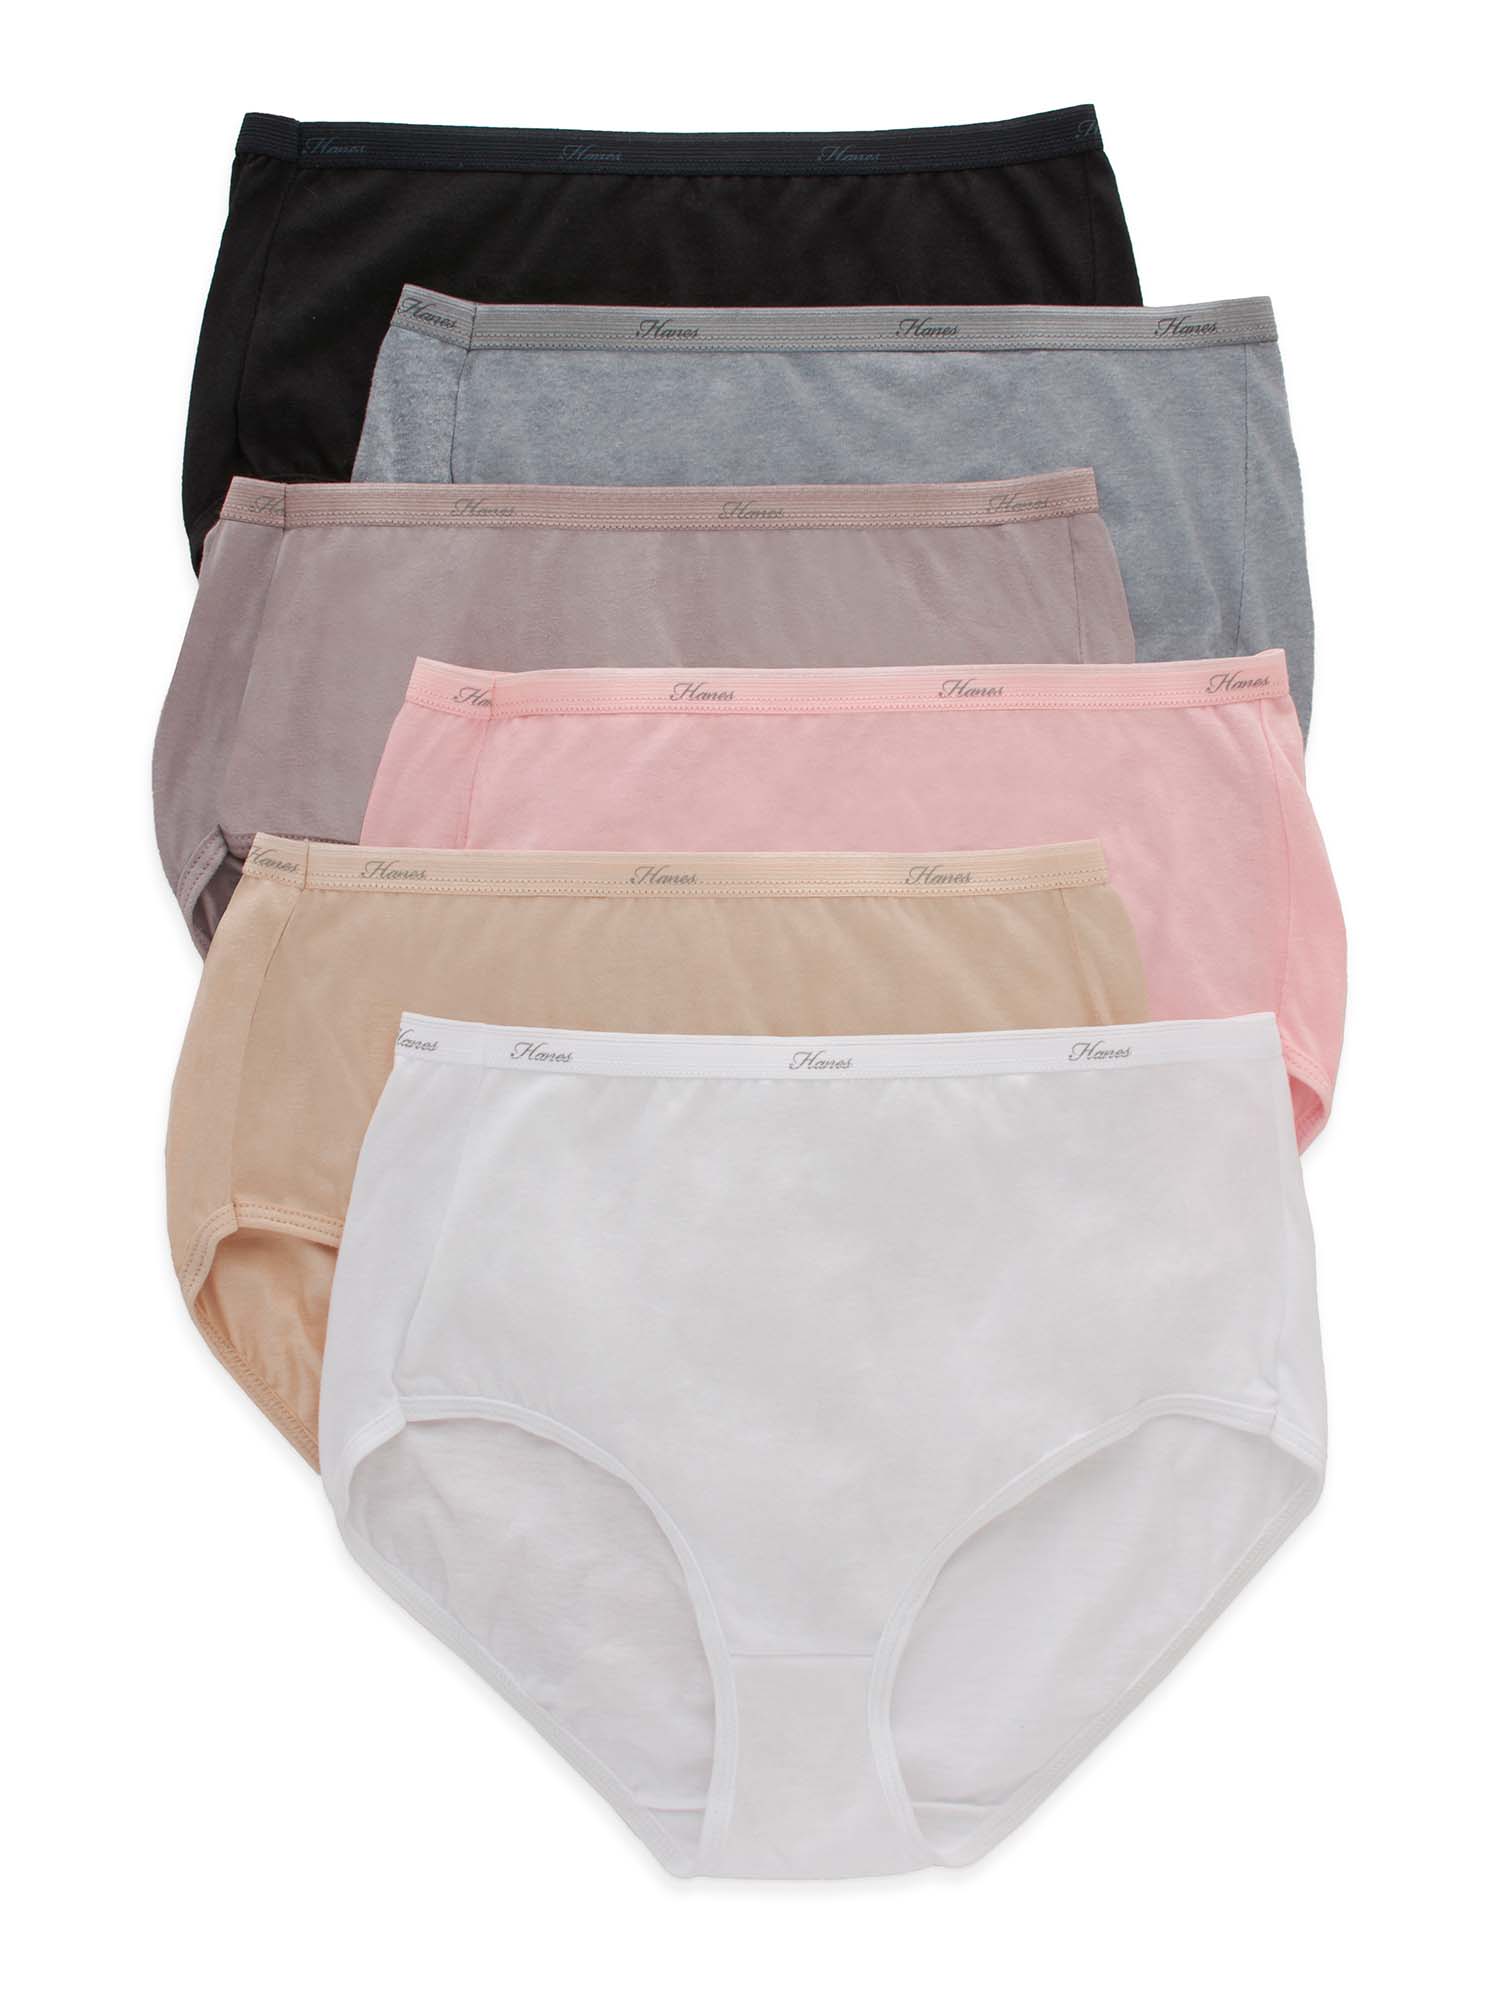 Hanes Women's Cool Comfort Cotton Brief Underwear, 6-Pack - image 1 of 8